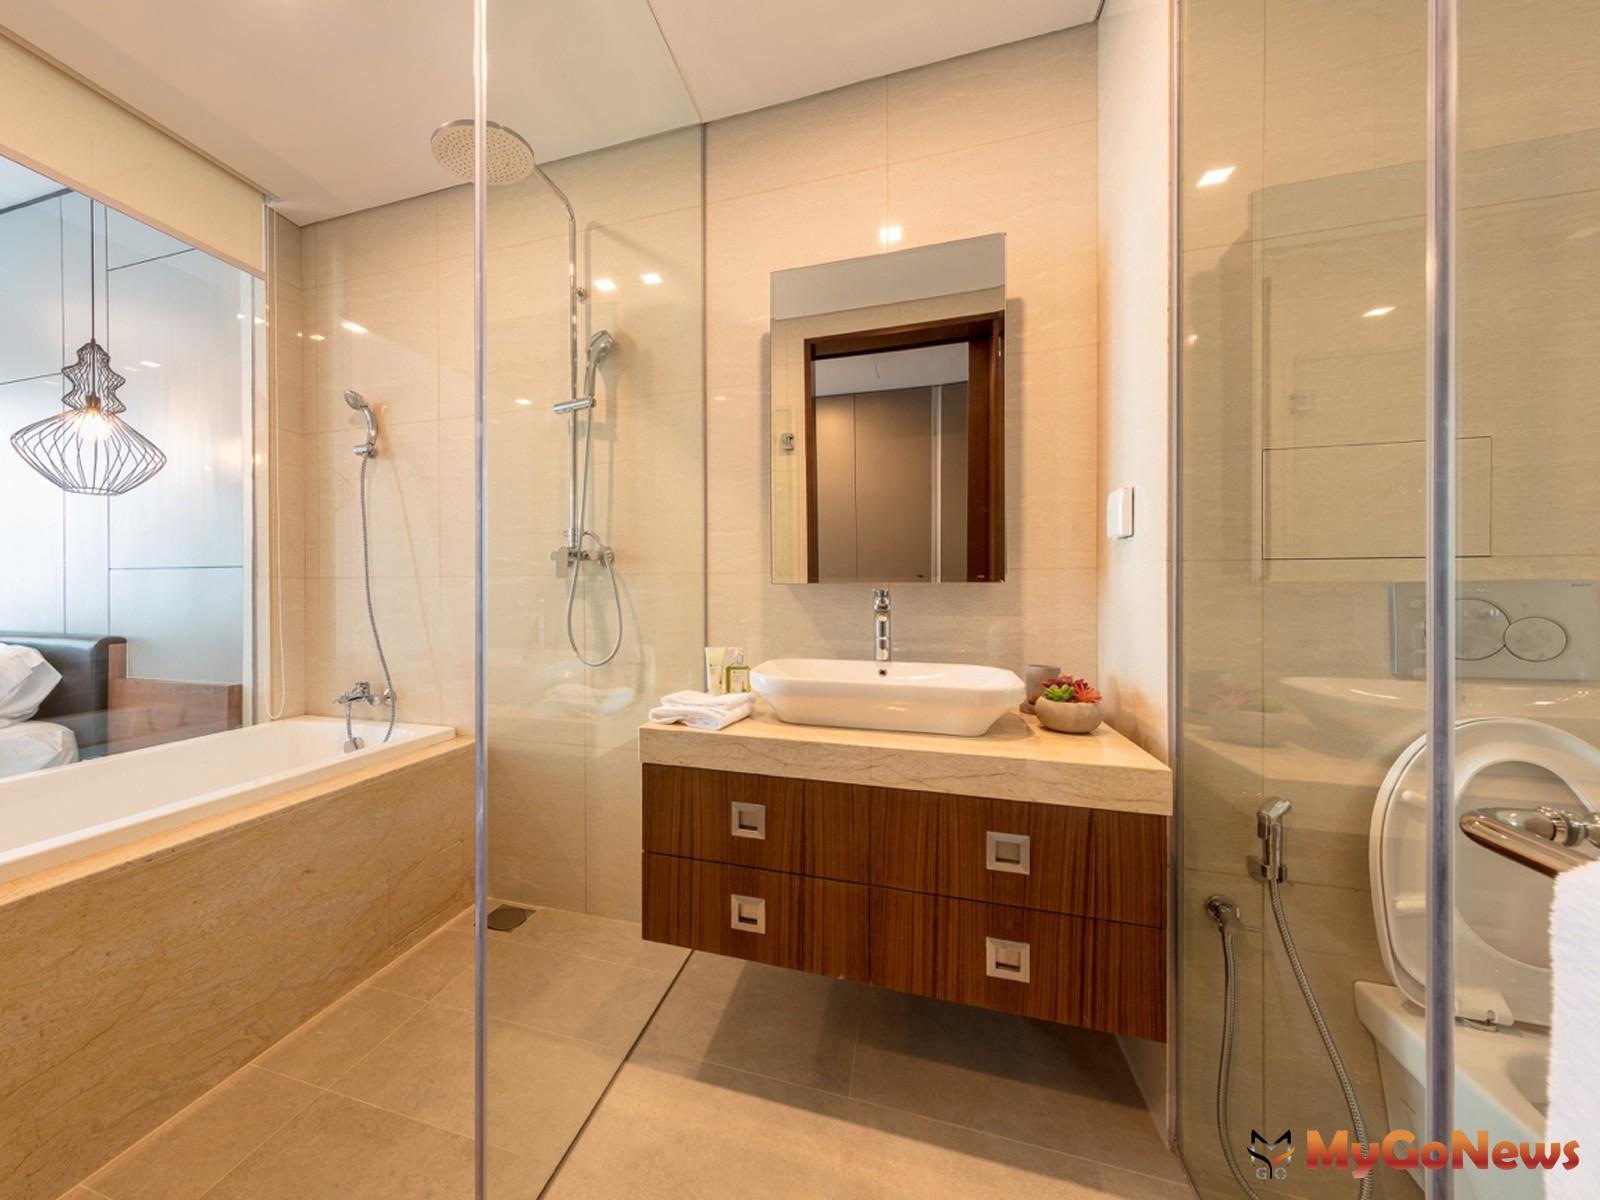 (Puteri Cove 公主港高級遊艇海景公寓 浴室，出處：DB2Land) MyGoNews房地產新聞 Global Real Estate